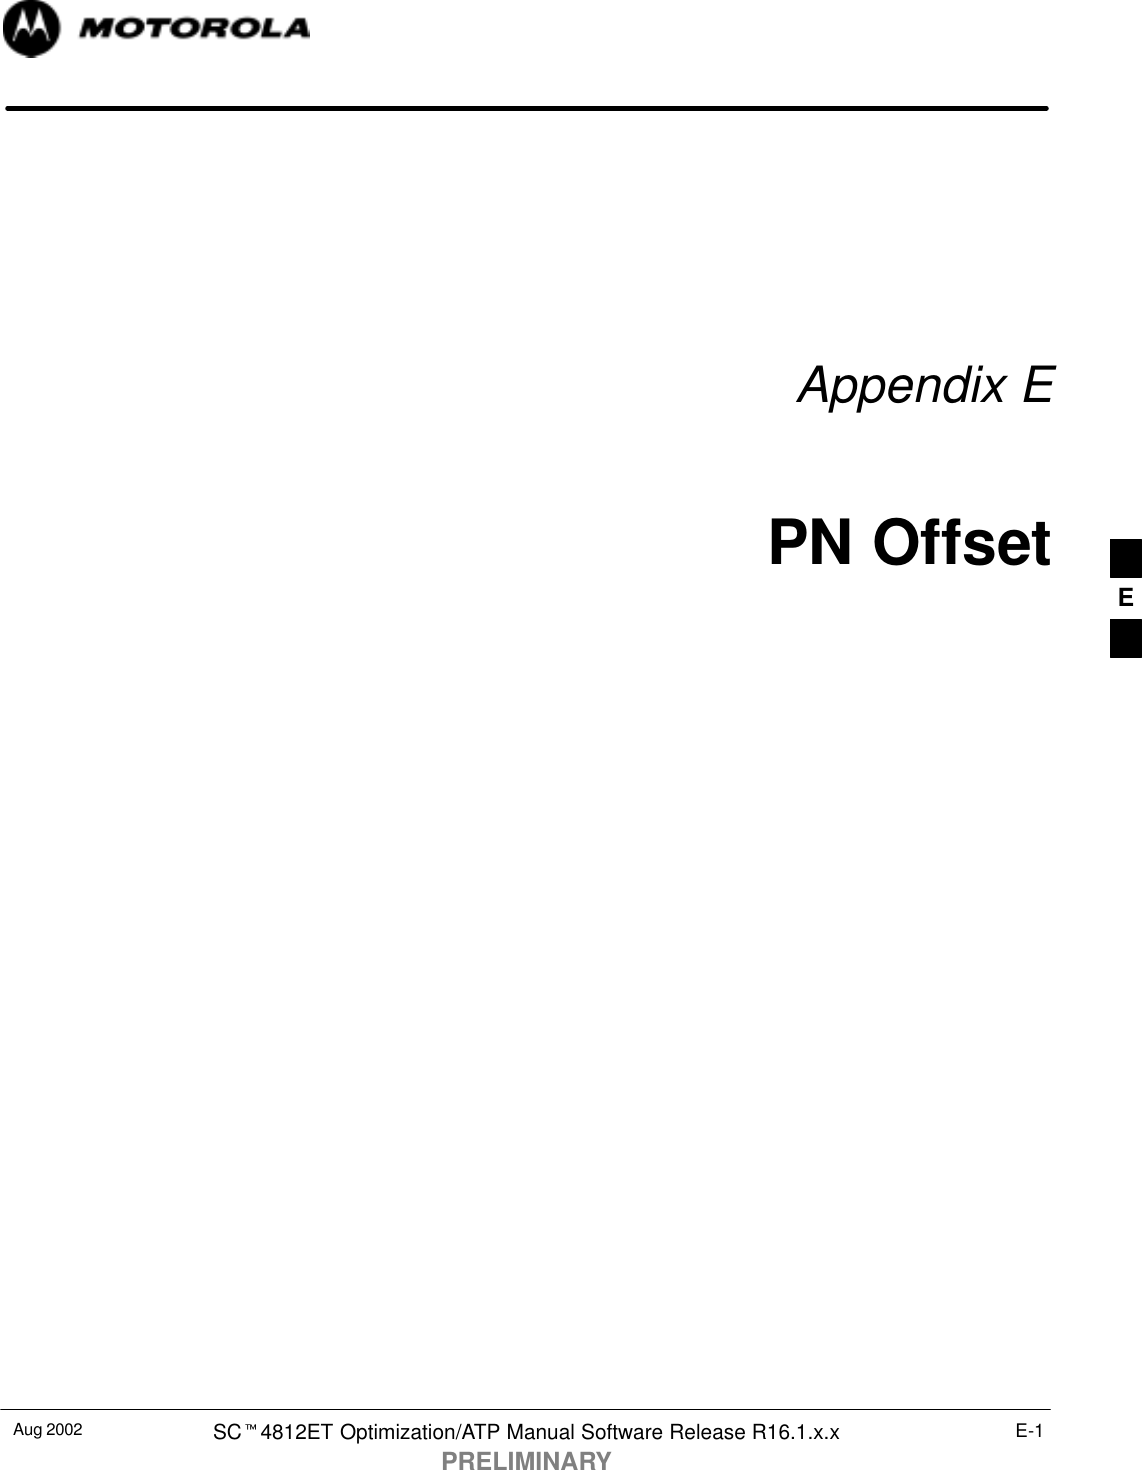 Aug 2002 SCt4812ET Optimization/ATP Manual Software Release R16.1.x.xPRELIMINARYE-1Appendix EPN Offset E